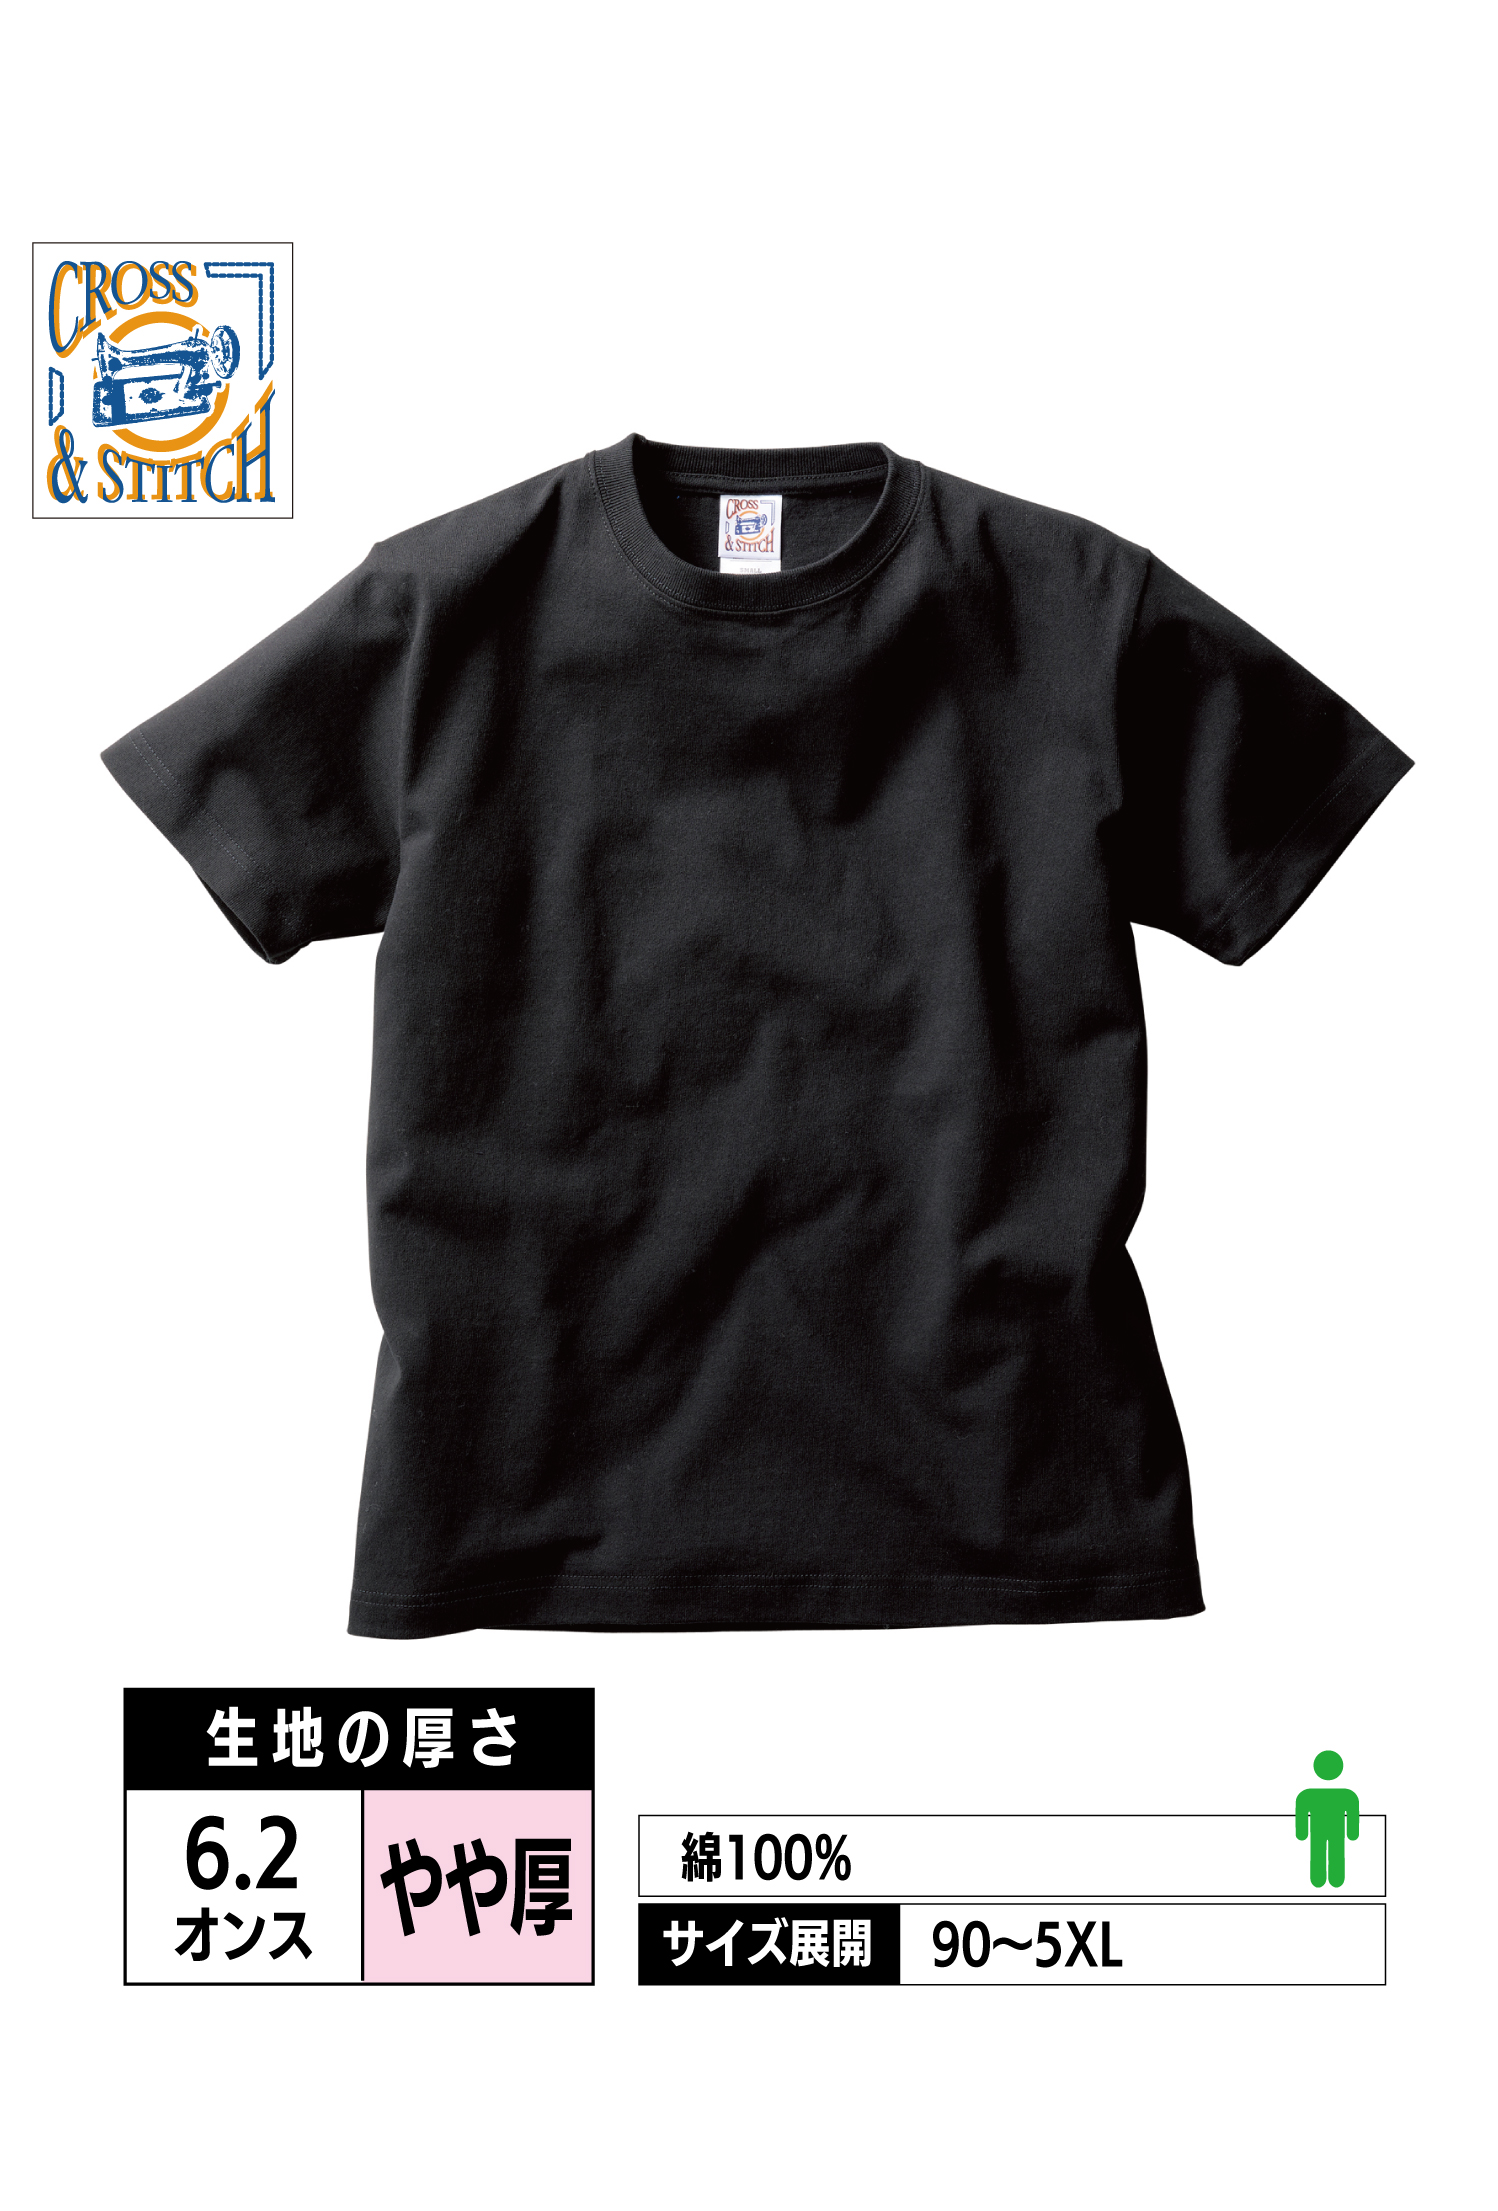 OE1116｜オープンエンド マックスウェイトTシャツ【全42色】CROSS&STITCH